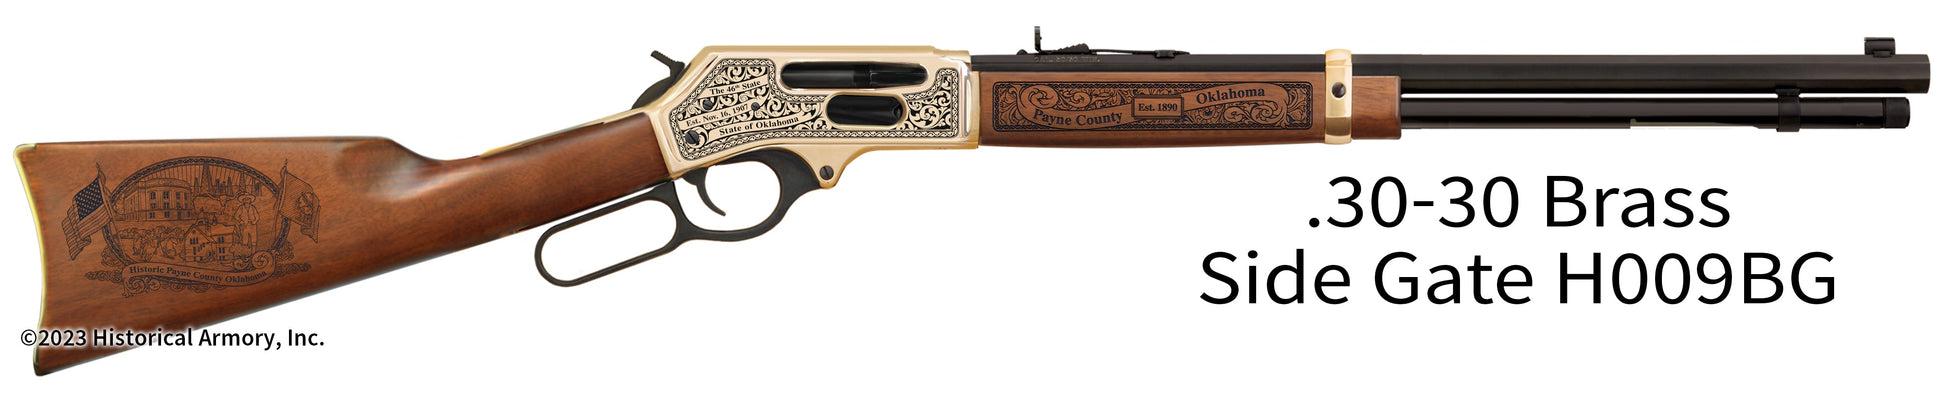 Payne County Oklahoma Engraved Henry .30-30 Brass Side Gate Rifle